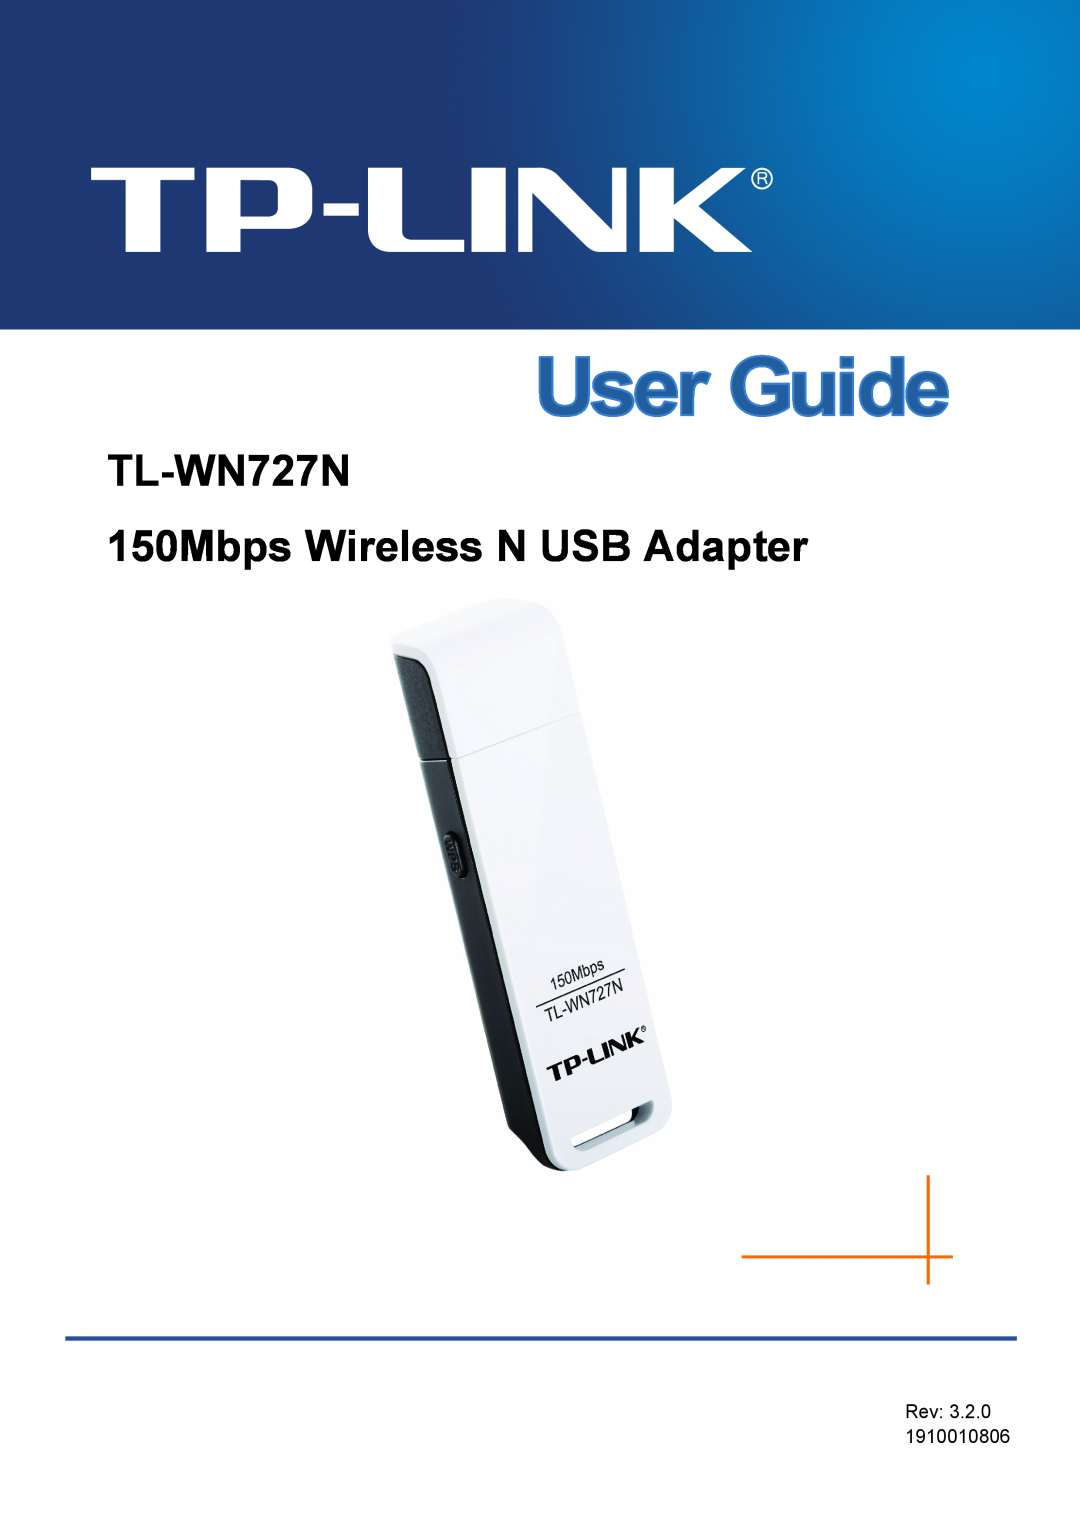 TP-Link manual TL-WN727N 150Mbps Wireless N USB Adapter, Rev 3.2.0 